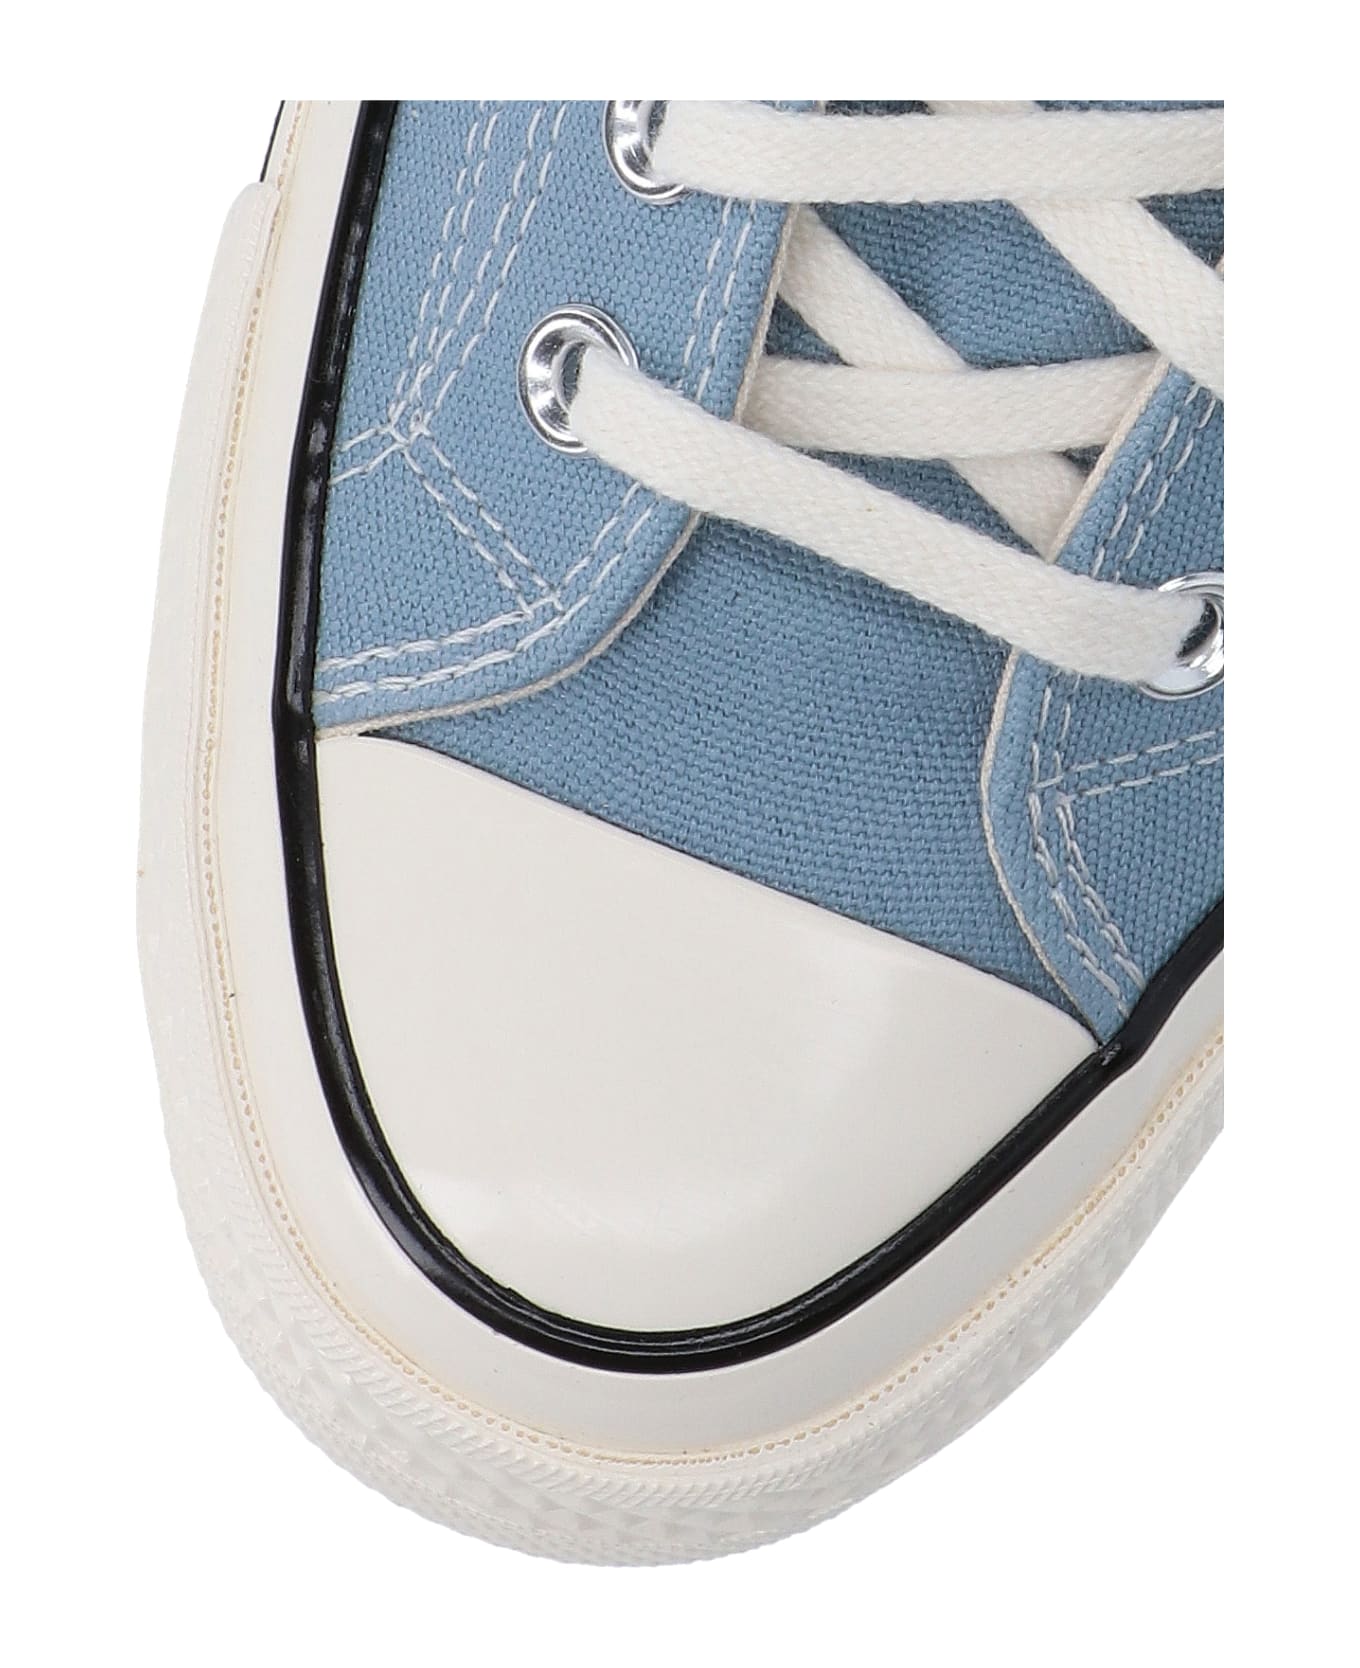 Converse "chuck 70 Vintage Canvas" Sneakers - Light Blue